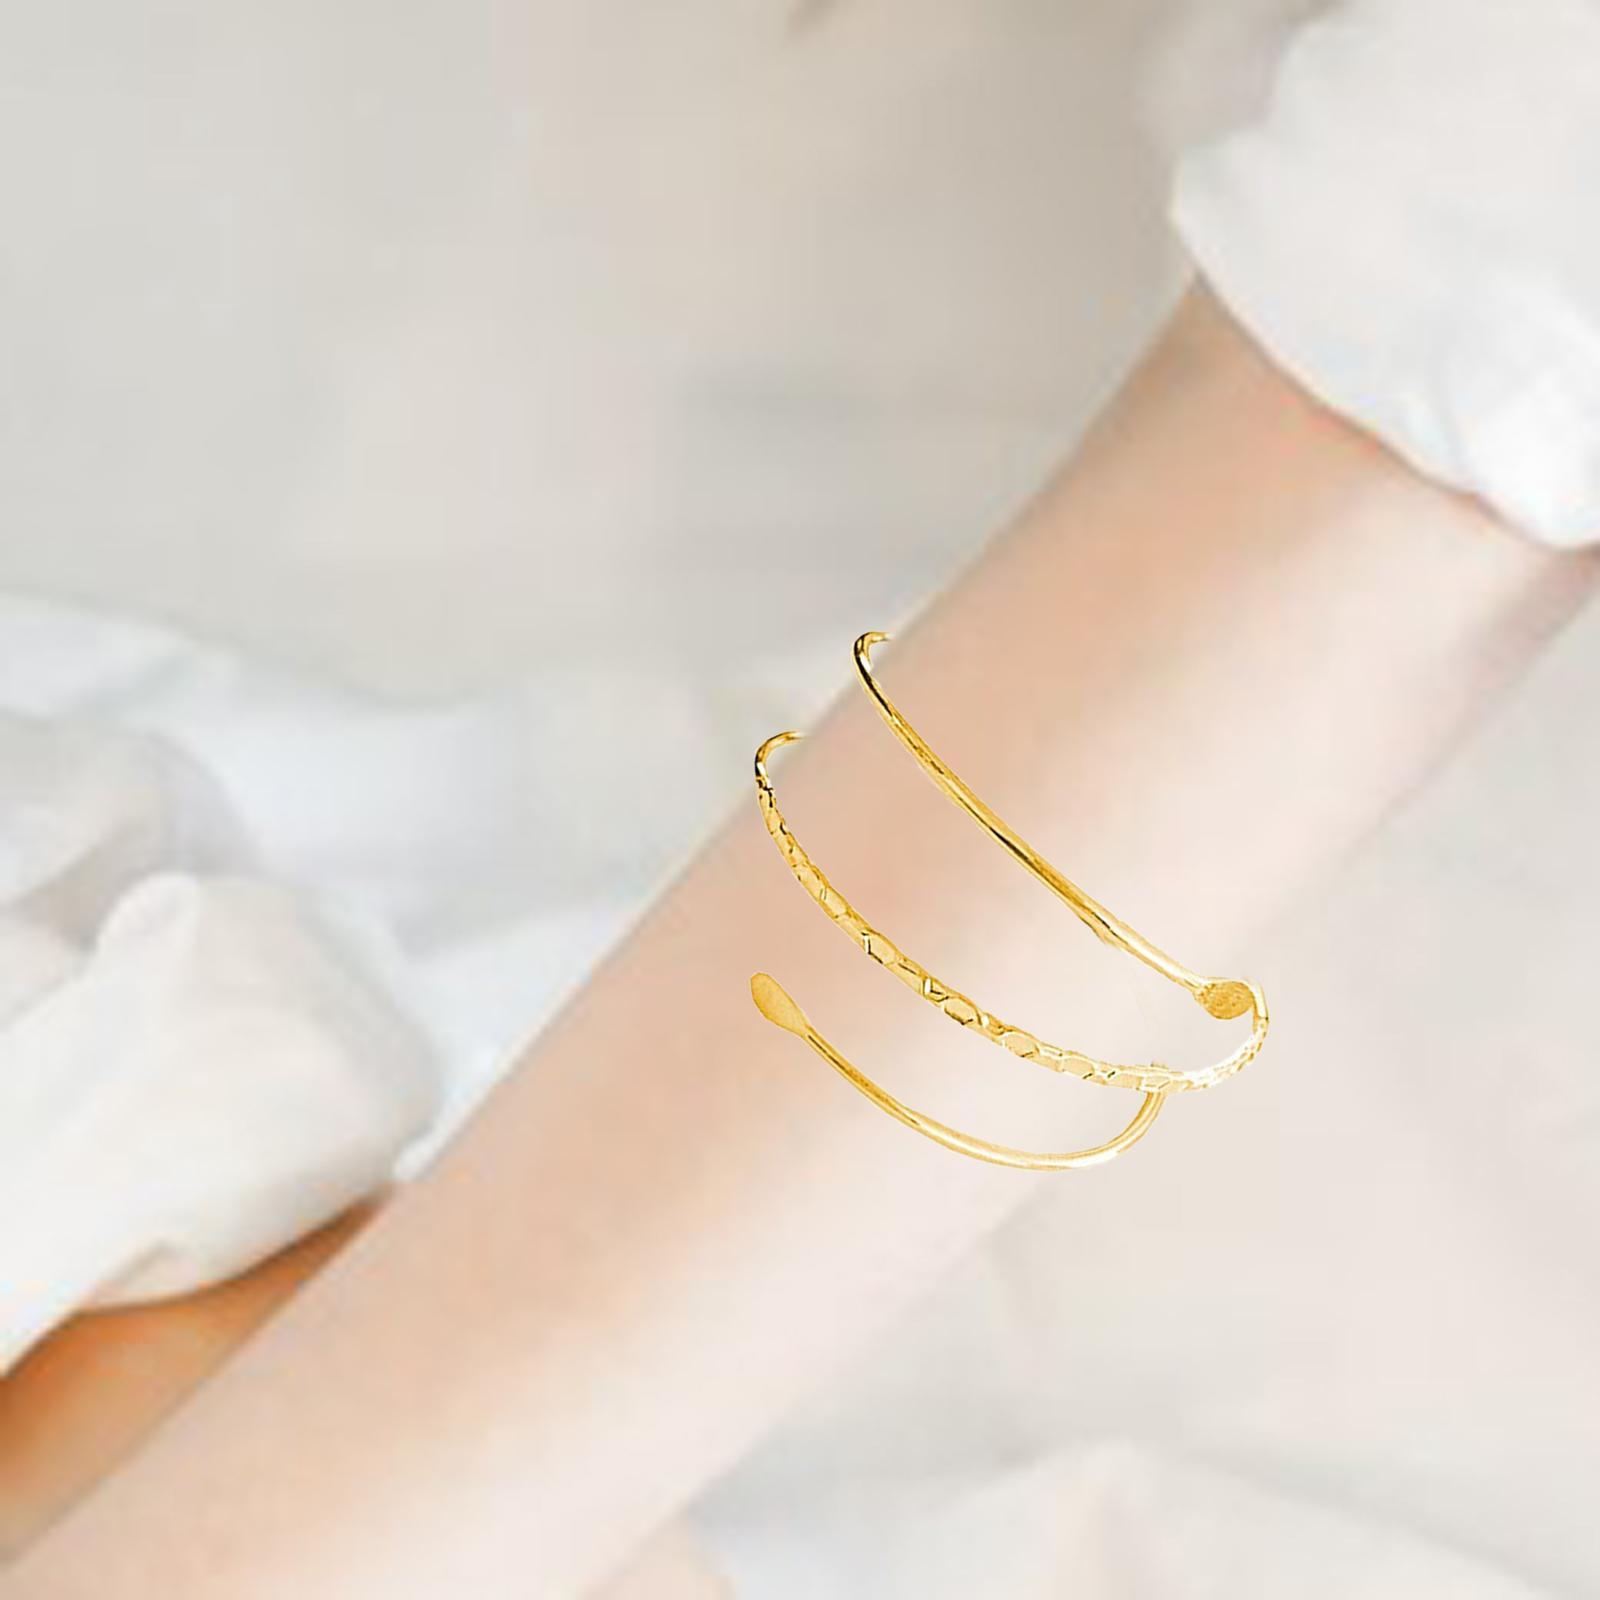 Fashion Swirl Upper Arm Bracelet Armlet Cuff Bangle Wrap Armband Adjustable | eBay